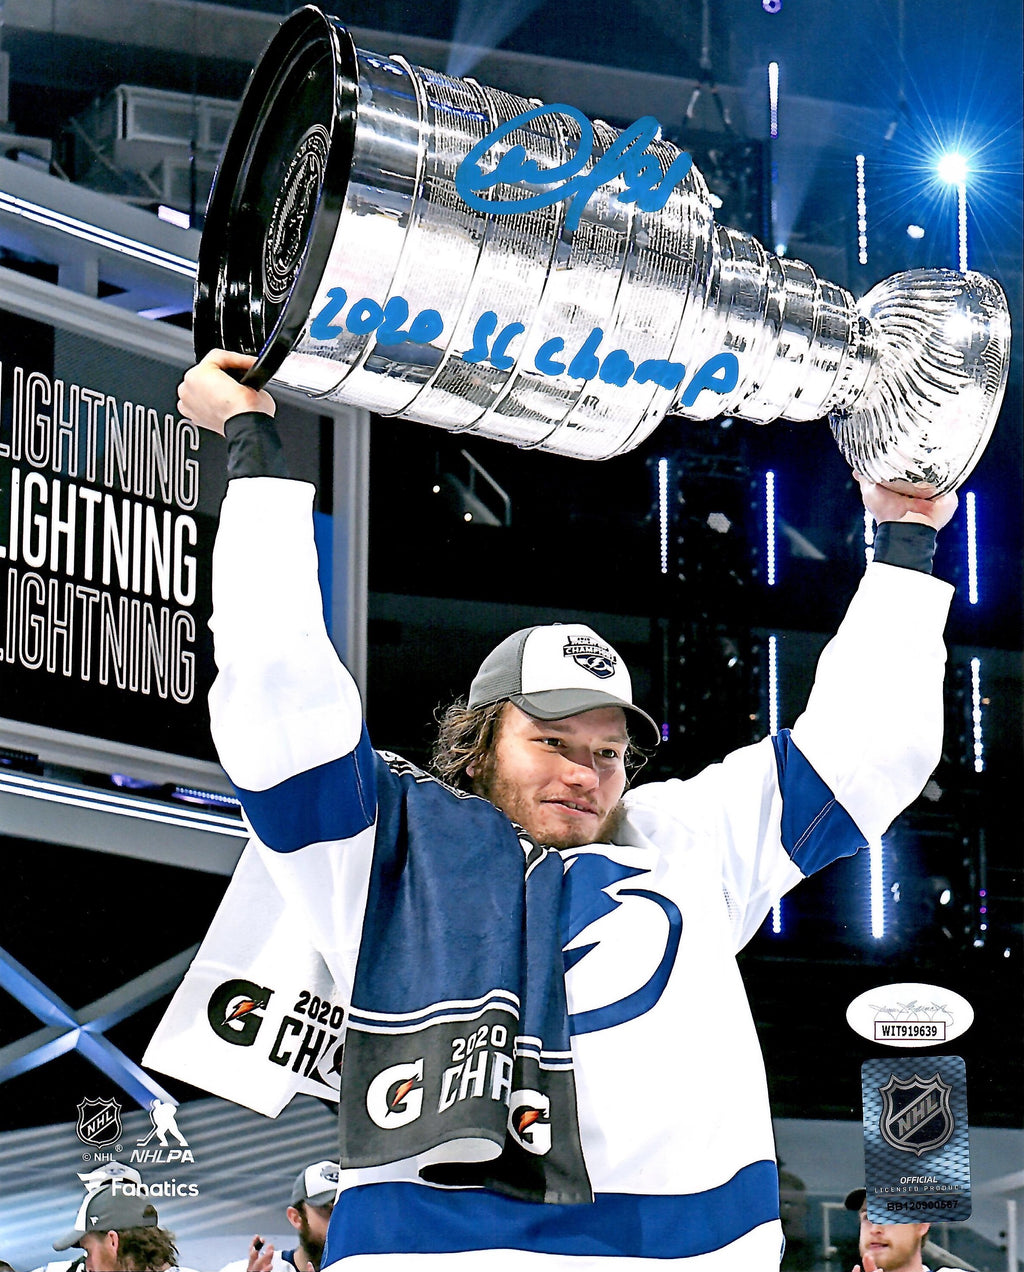 Mikhail Sergachev signed inscribed 8x10 photo NHL Tampa Bay Lightning JSA COA